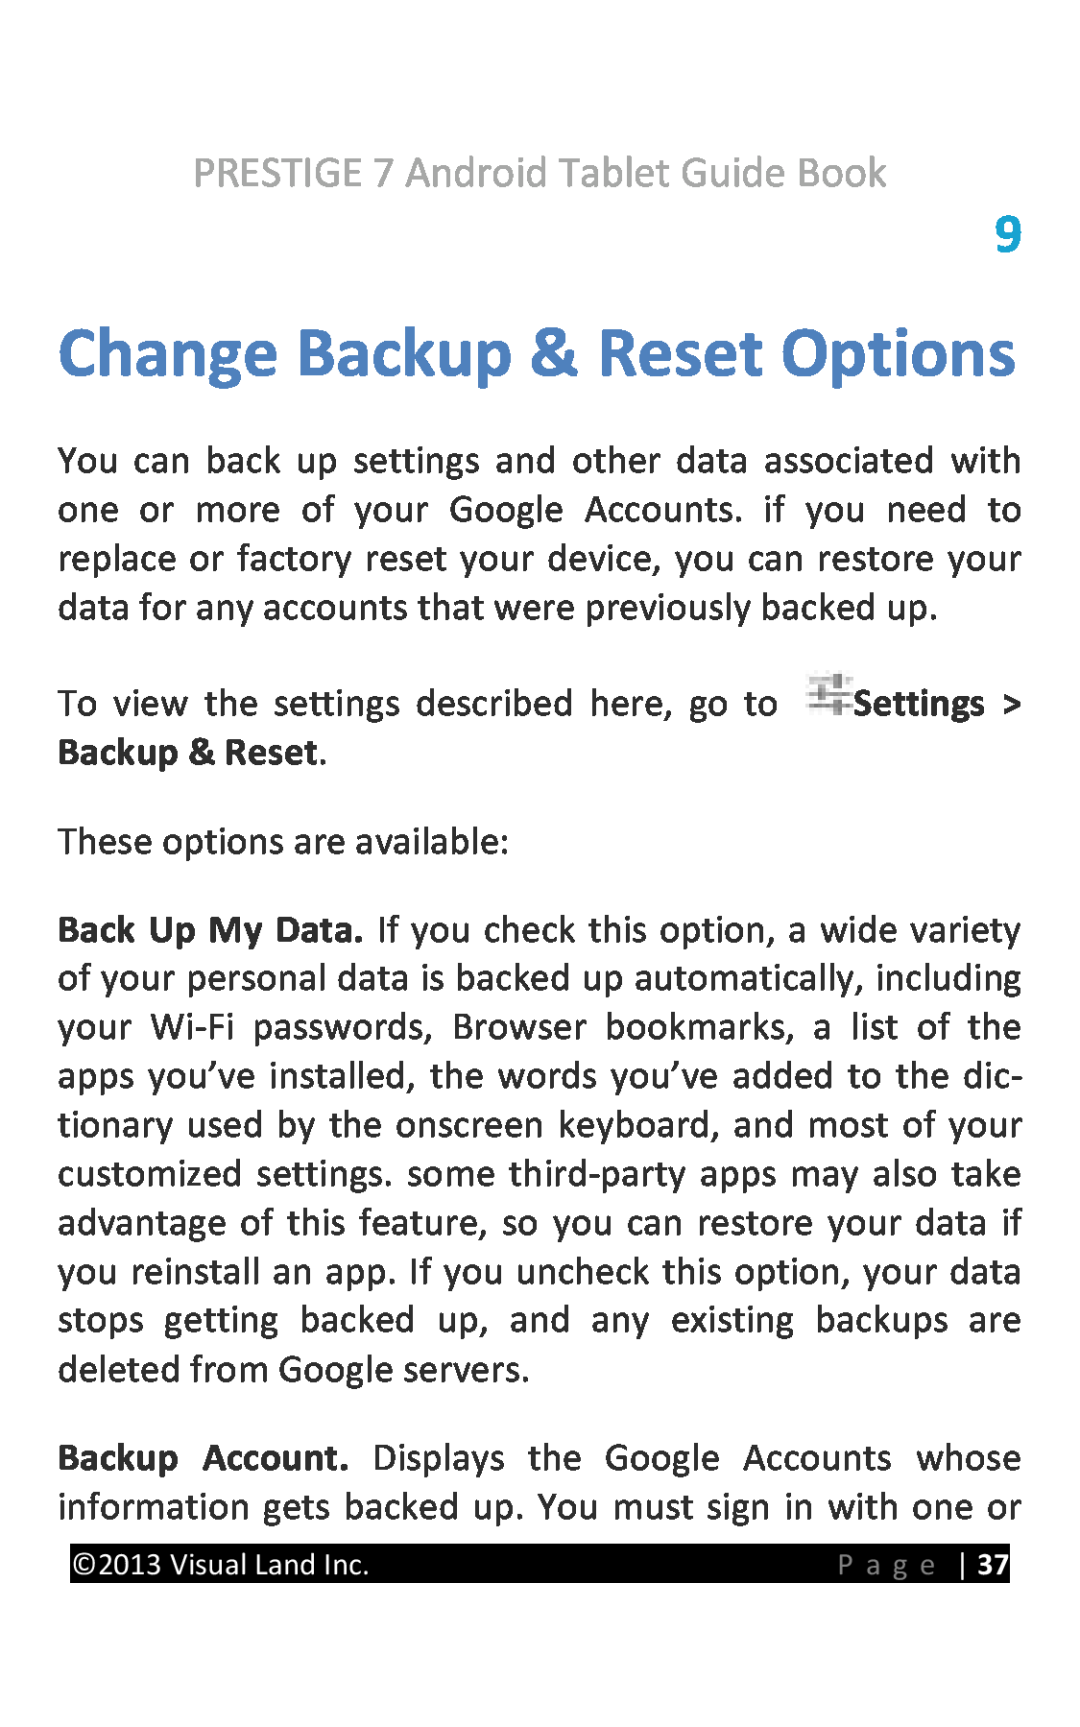 Visual Land 7D8TCBLK manual Change Backup & Reset Options, PRESTIGE 7 Android Tablet Guide Book 